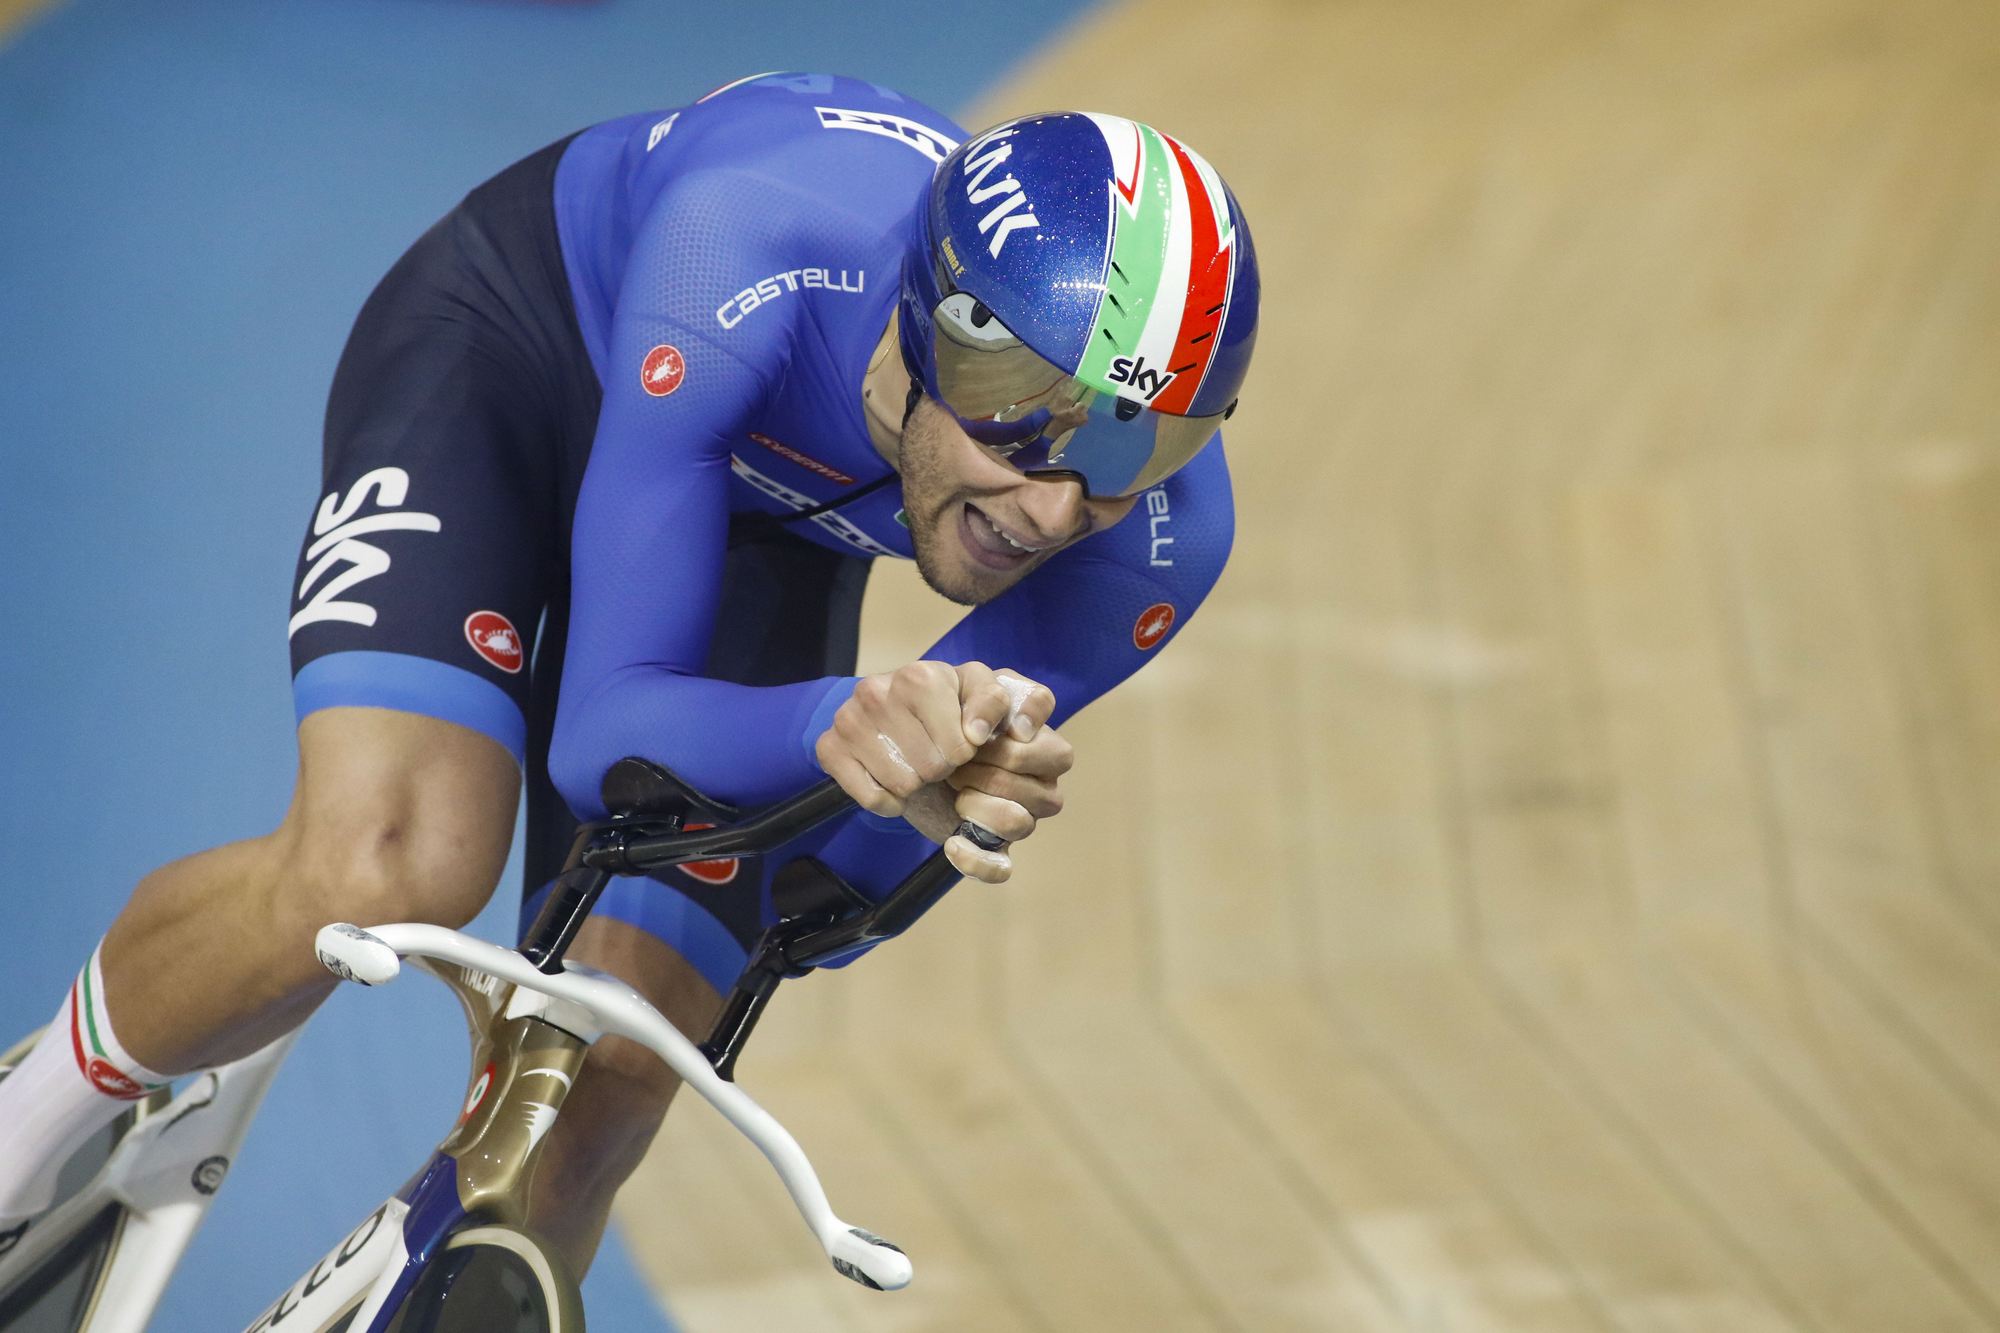 Italian Filippo Ganna smashes cycling's one-hour record